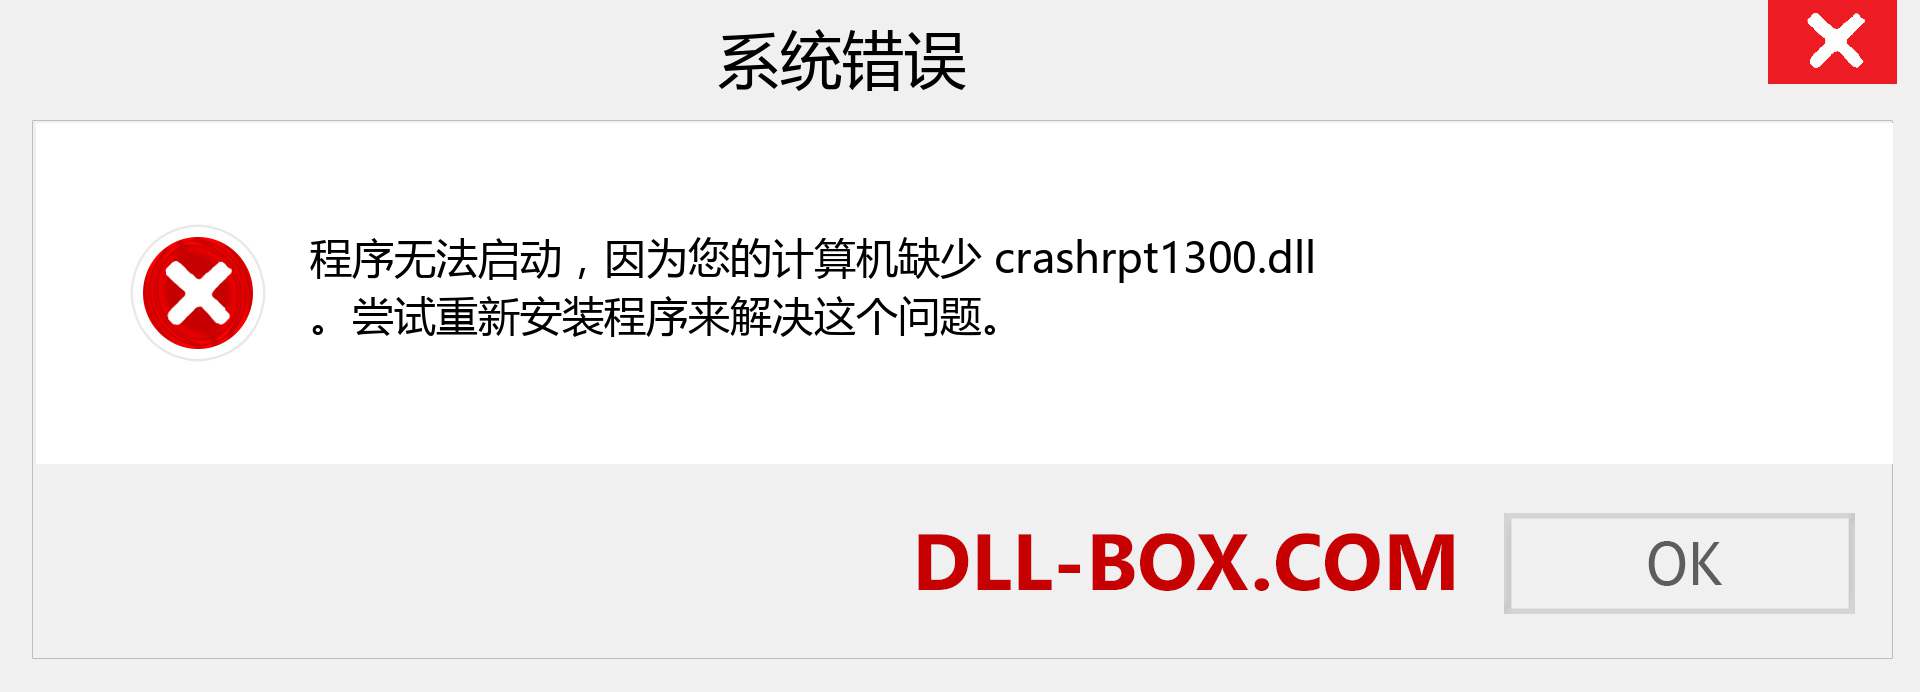 crashrpt1300.dll 文件丢失？。 适用于 Windows 7、8、10 的下载 - 修复 Windows、照片、图像上的 crashrpt1300 dll 丢失错误